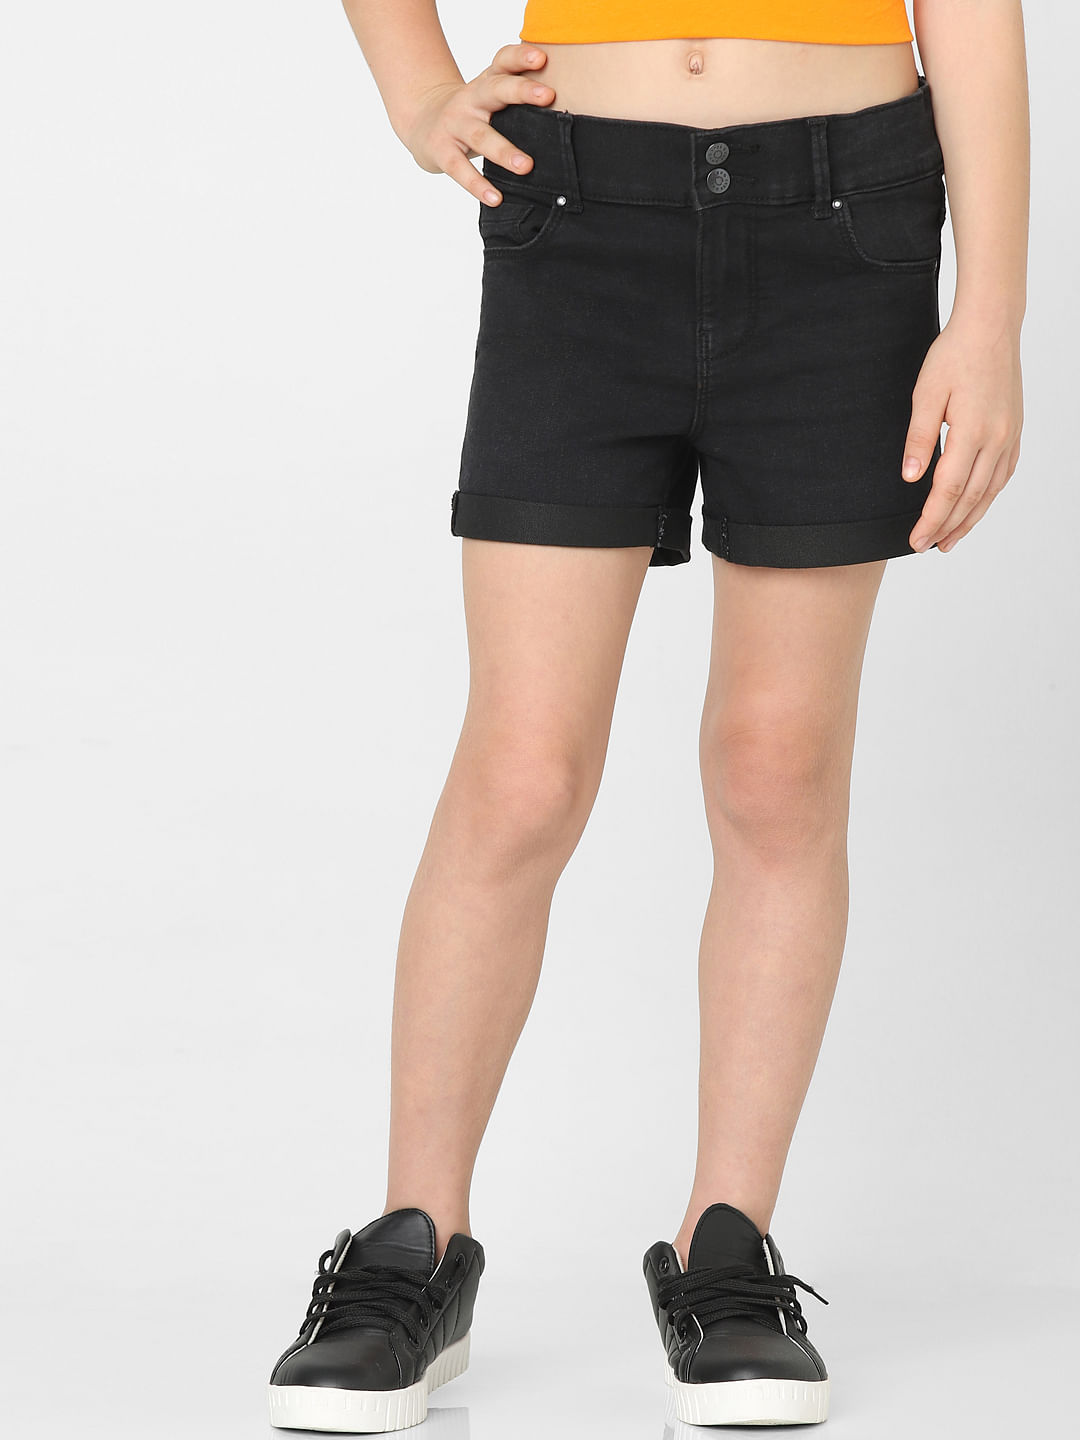 Buy Roadster Women Black Washed Regular Fit Denim Shorts - Shorts for Women  11541560 | Myntra